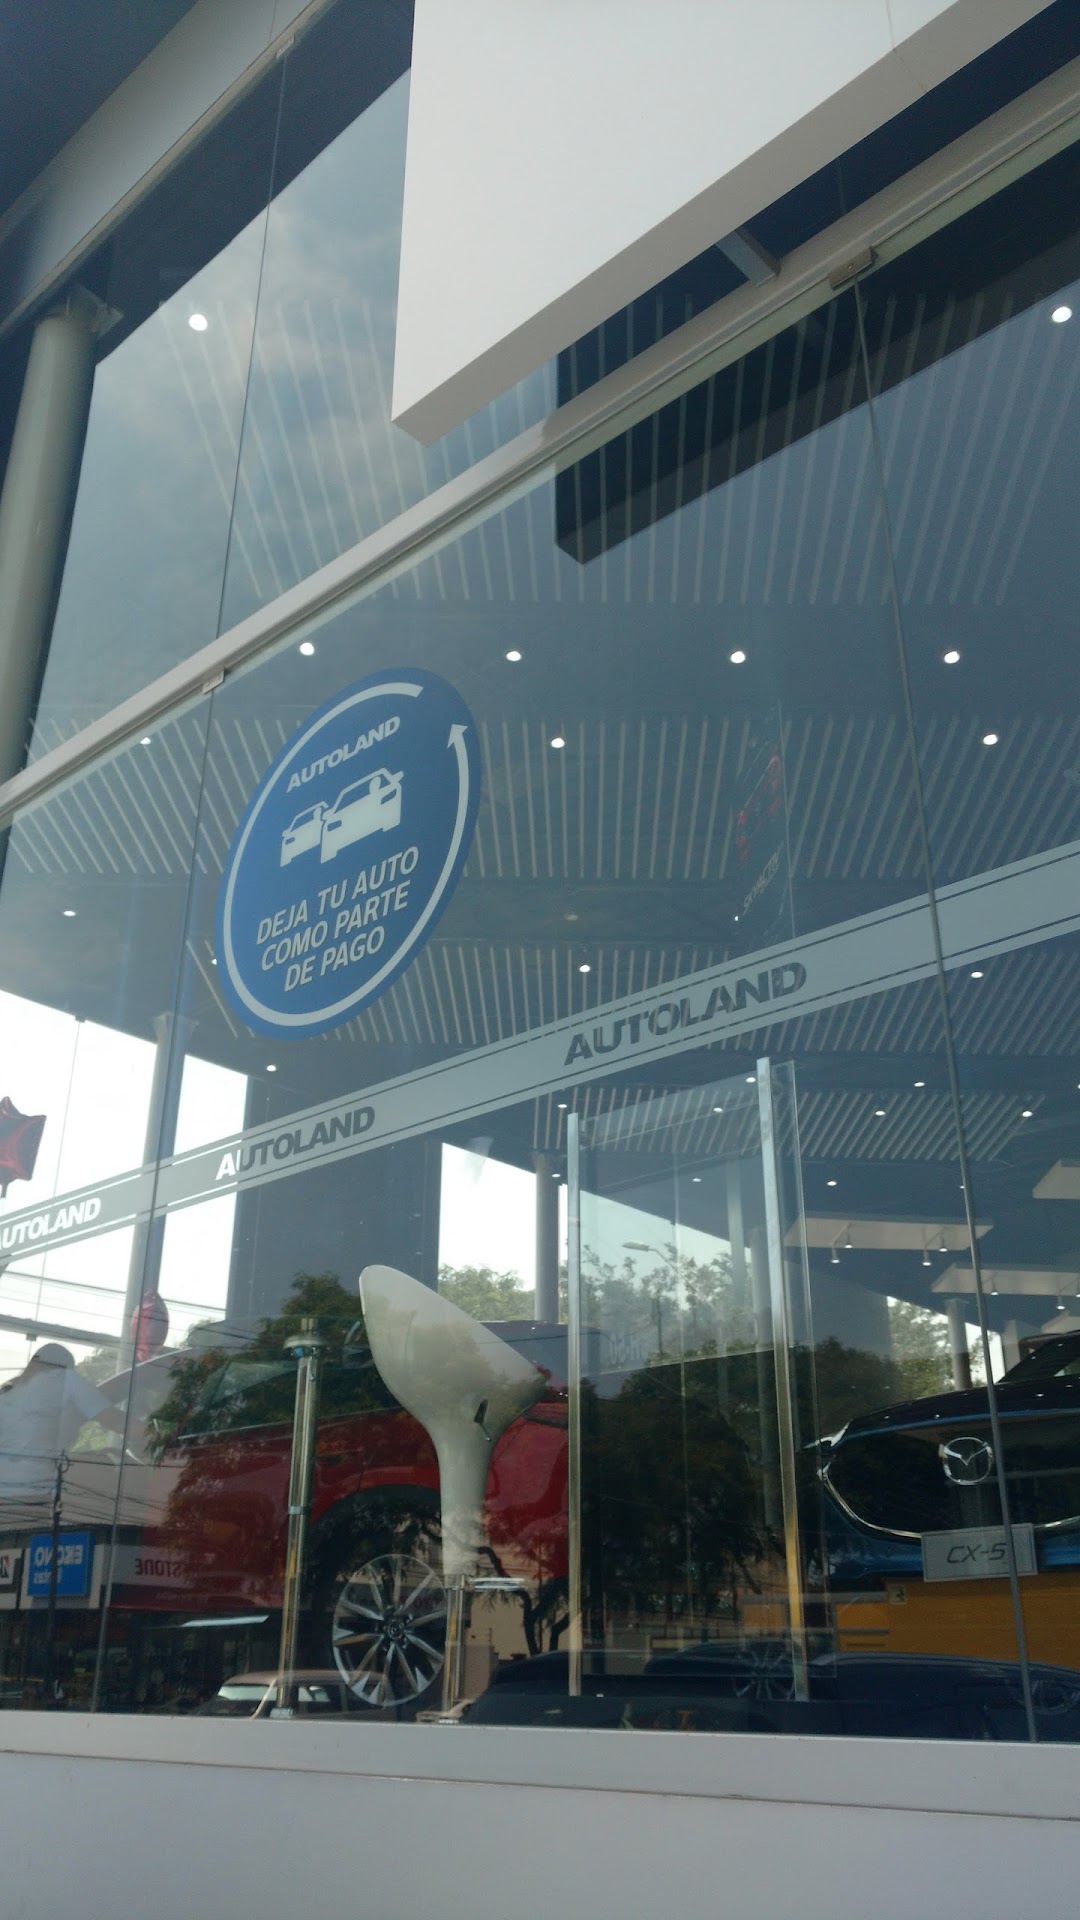 Autoland Surco Mazda & Suzuki